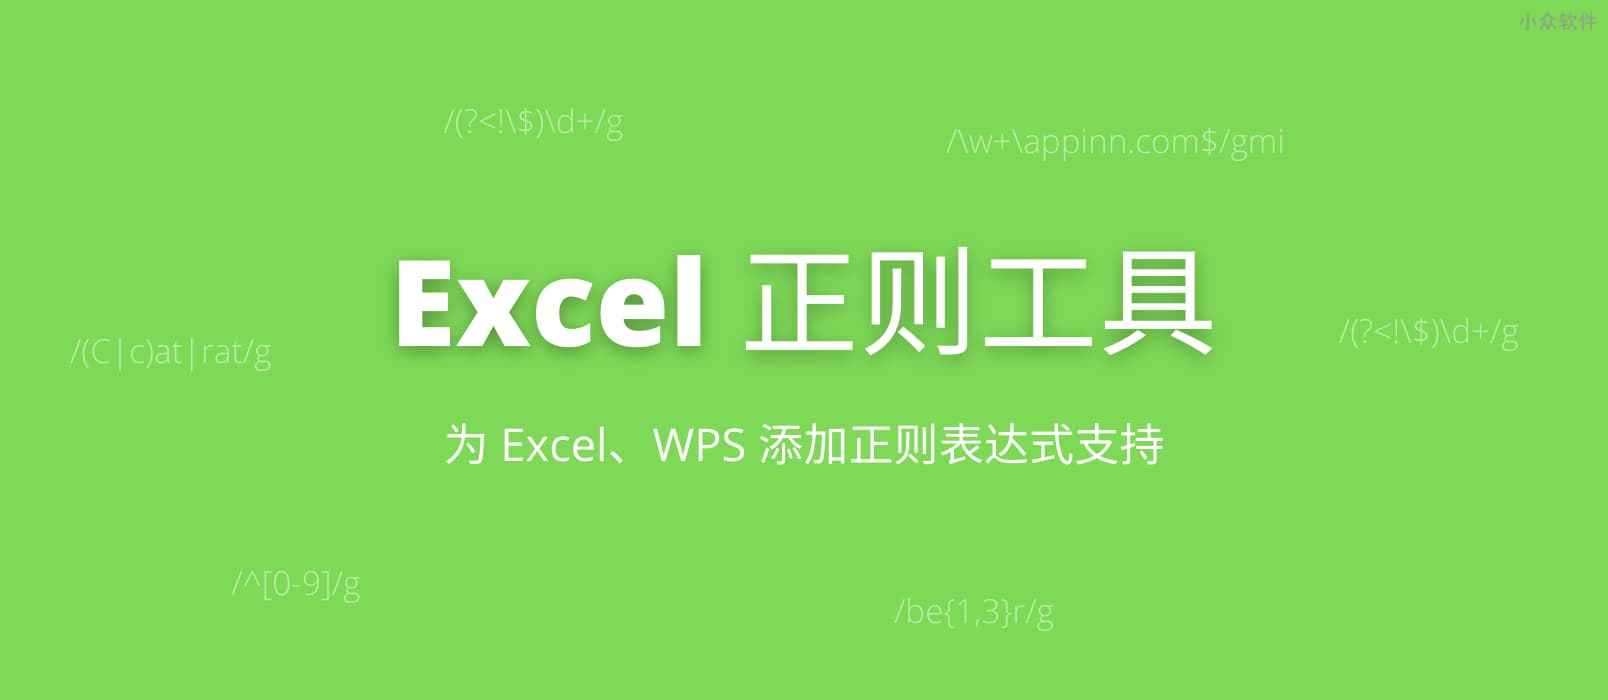 Excel正则工具 - 为 Excel、WPS  添加正则表达式支持[Windows]